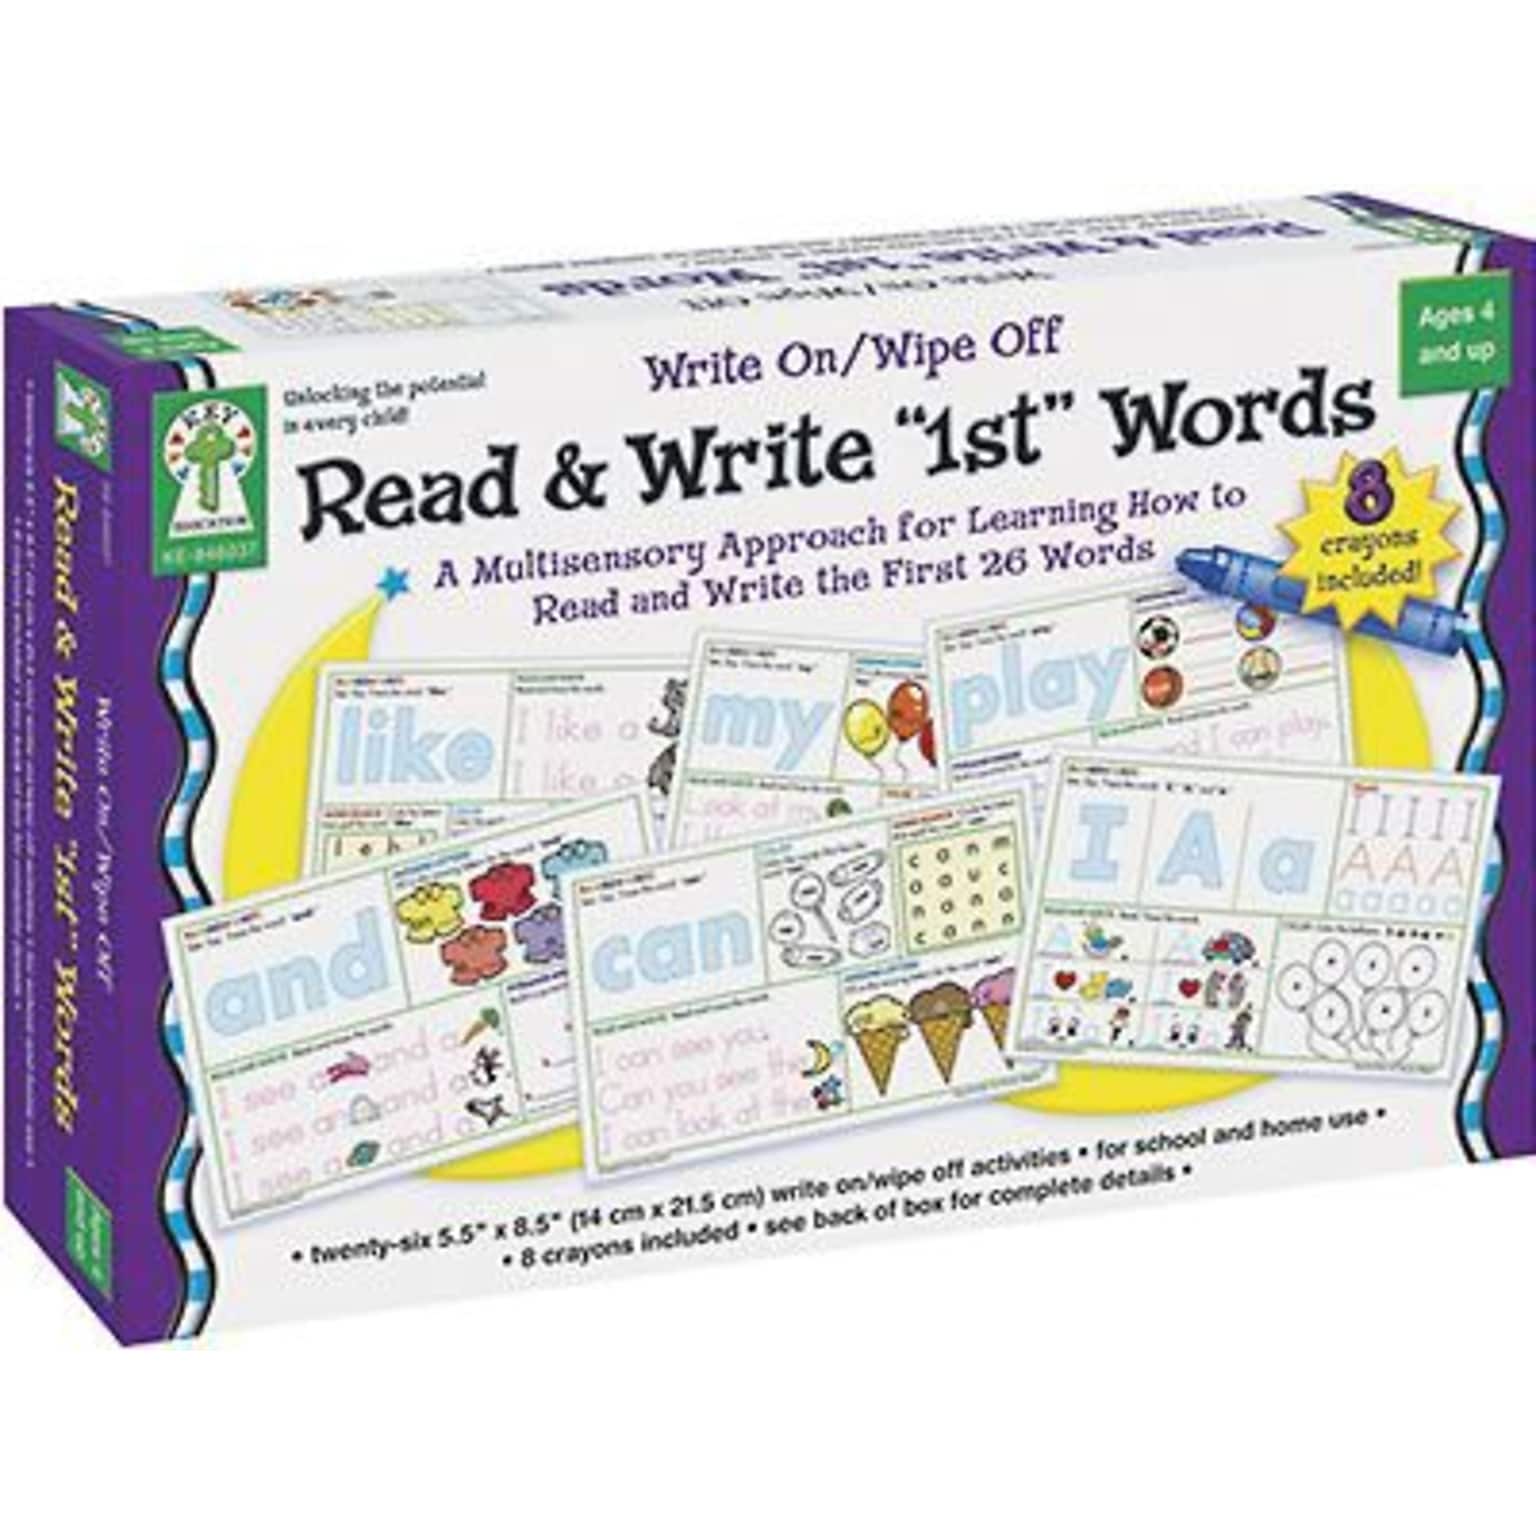 Assorted Publishers Key Education Write On/Wipe Off Cards, Read & Write 1st Words, 34 Cards/Set (KE846037)